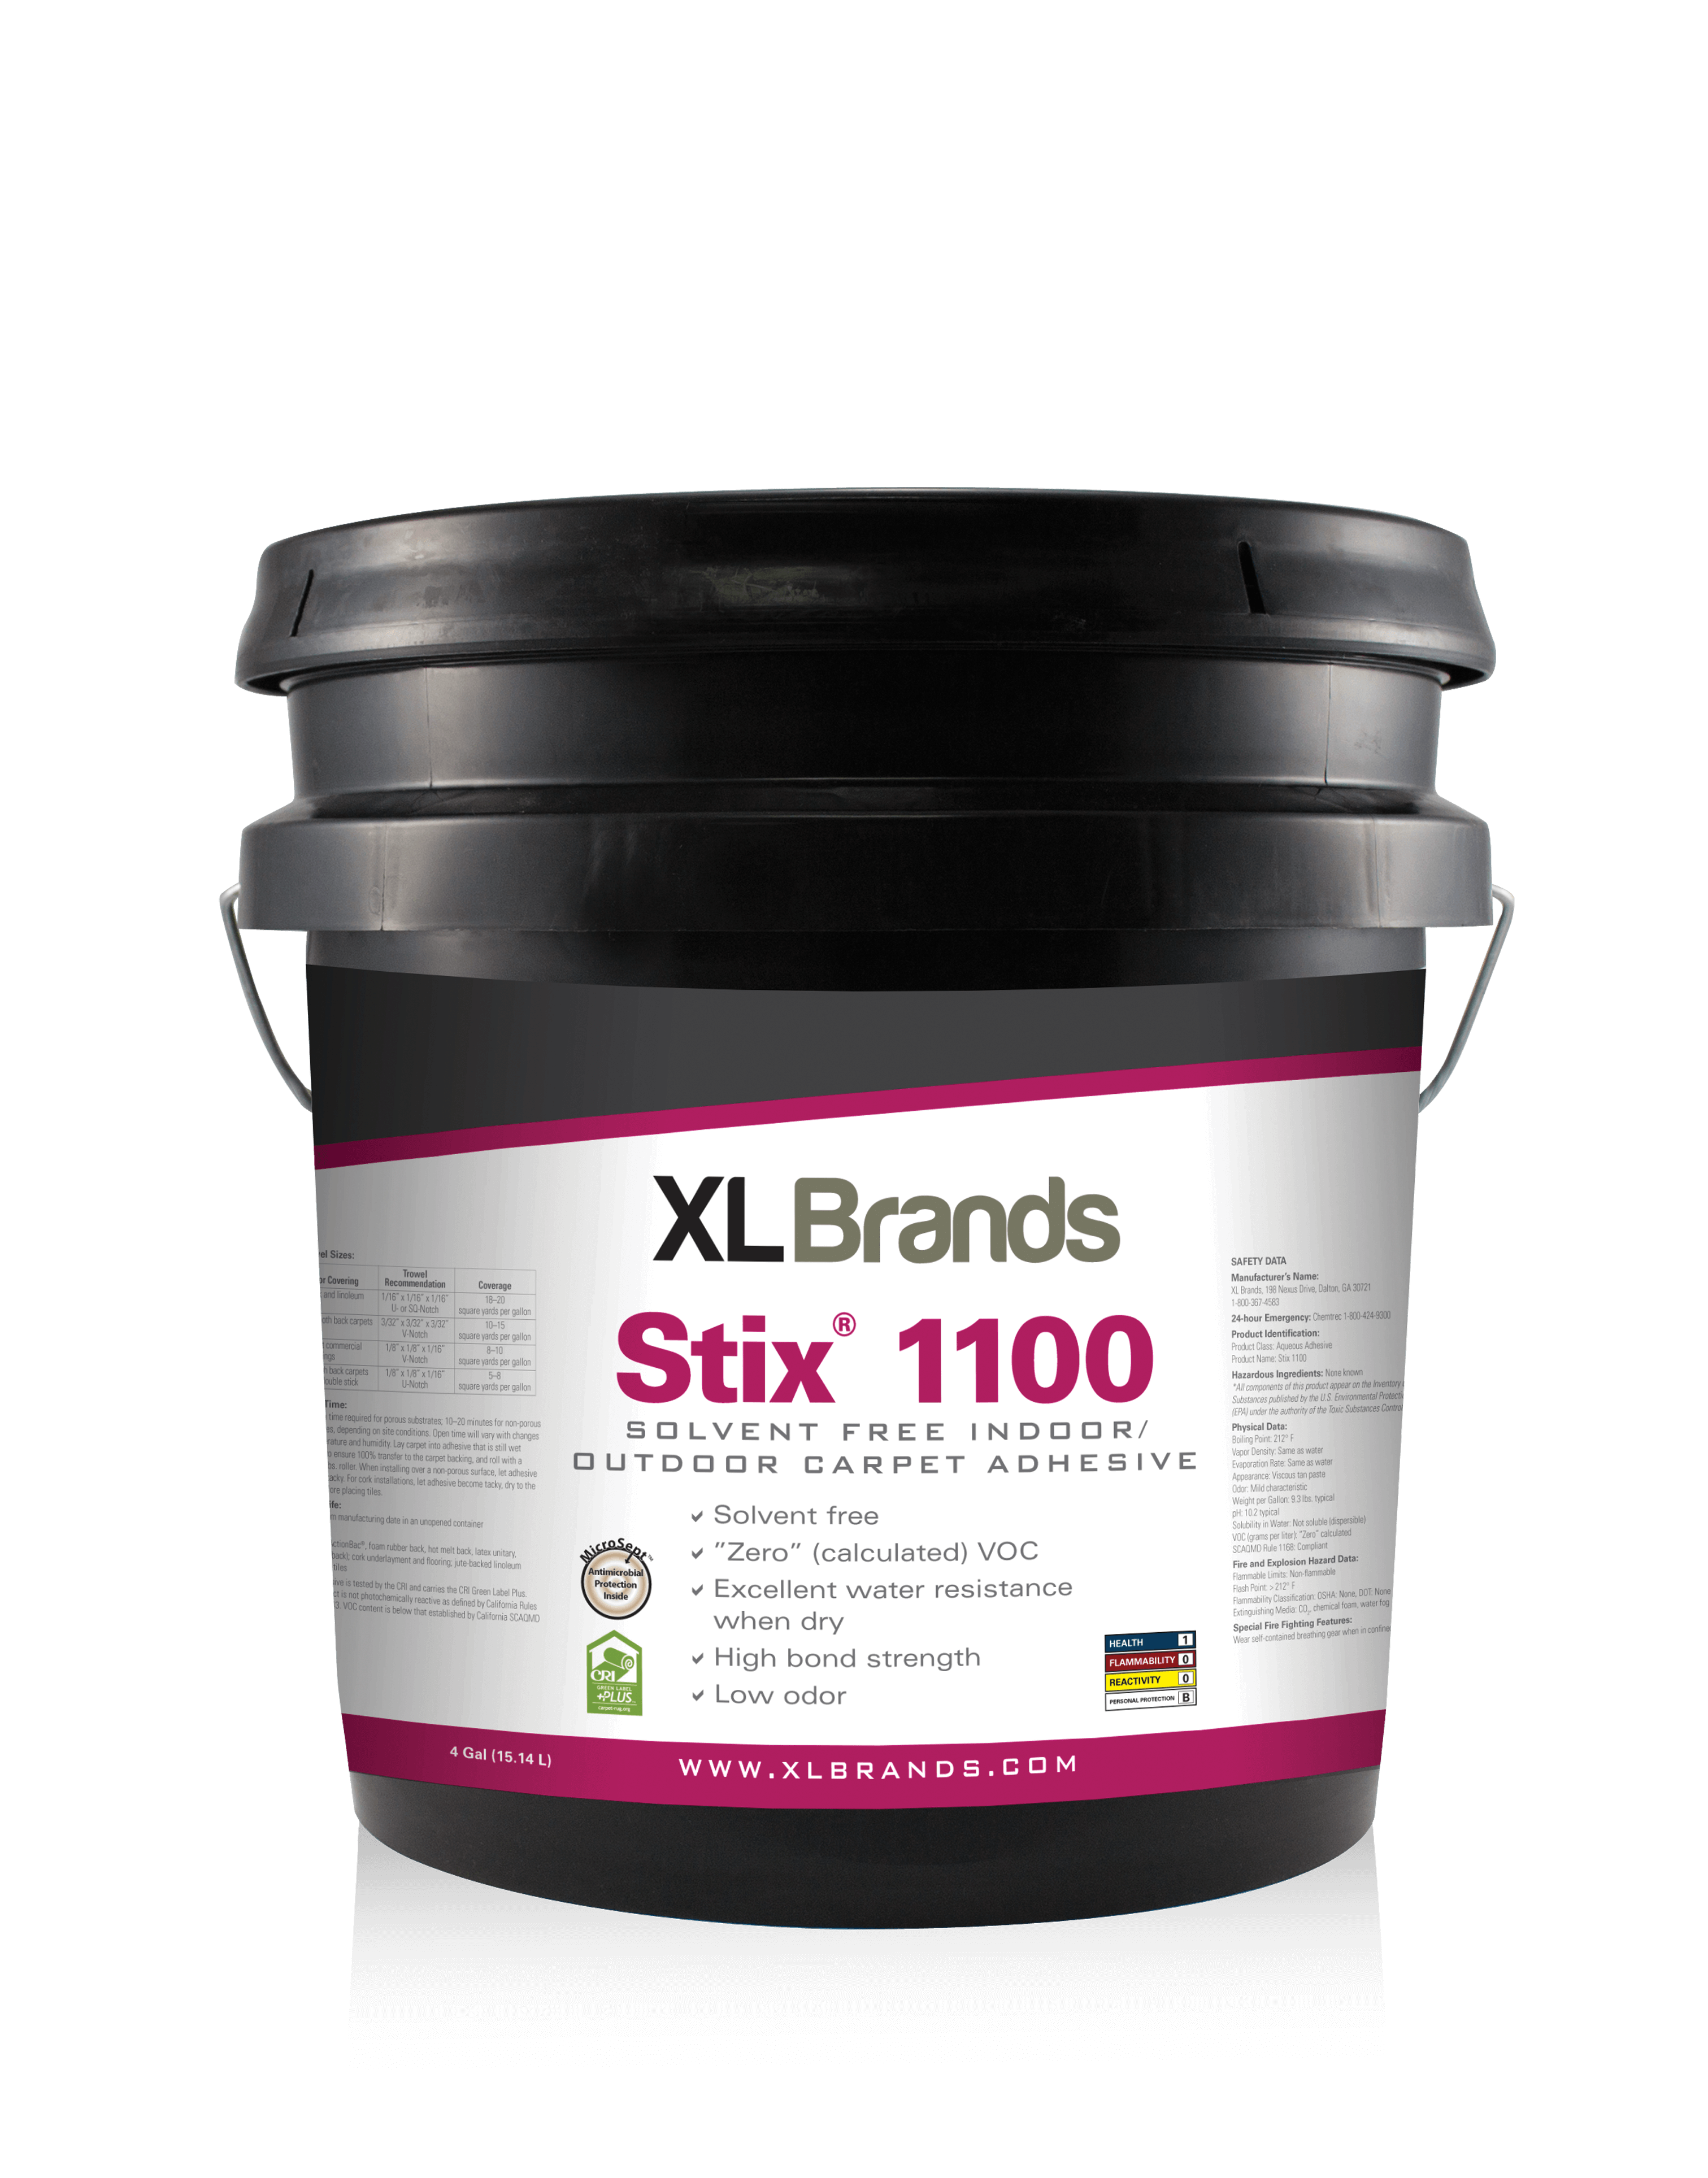 XL Brands Stix 1100 Solvent Free Indoor/Outdoor Carpet Adhesive - 1 Gal.